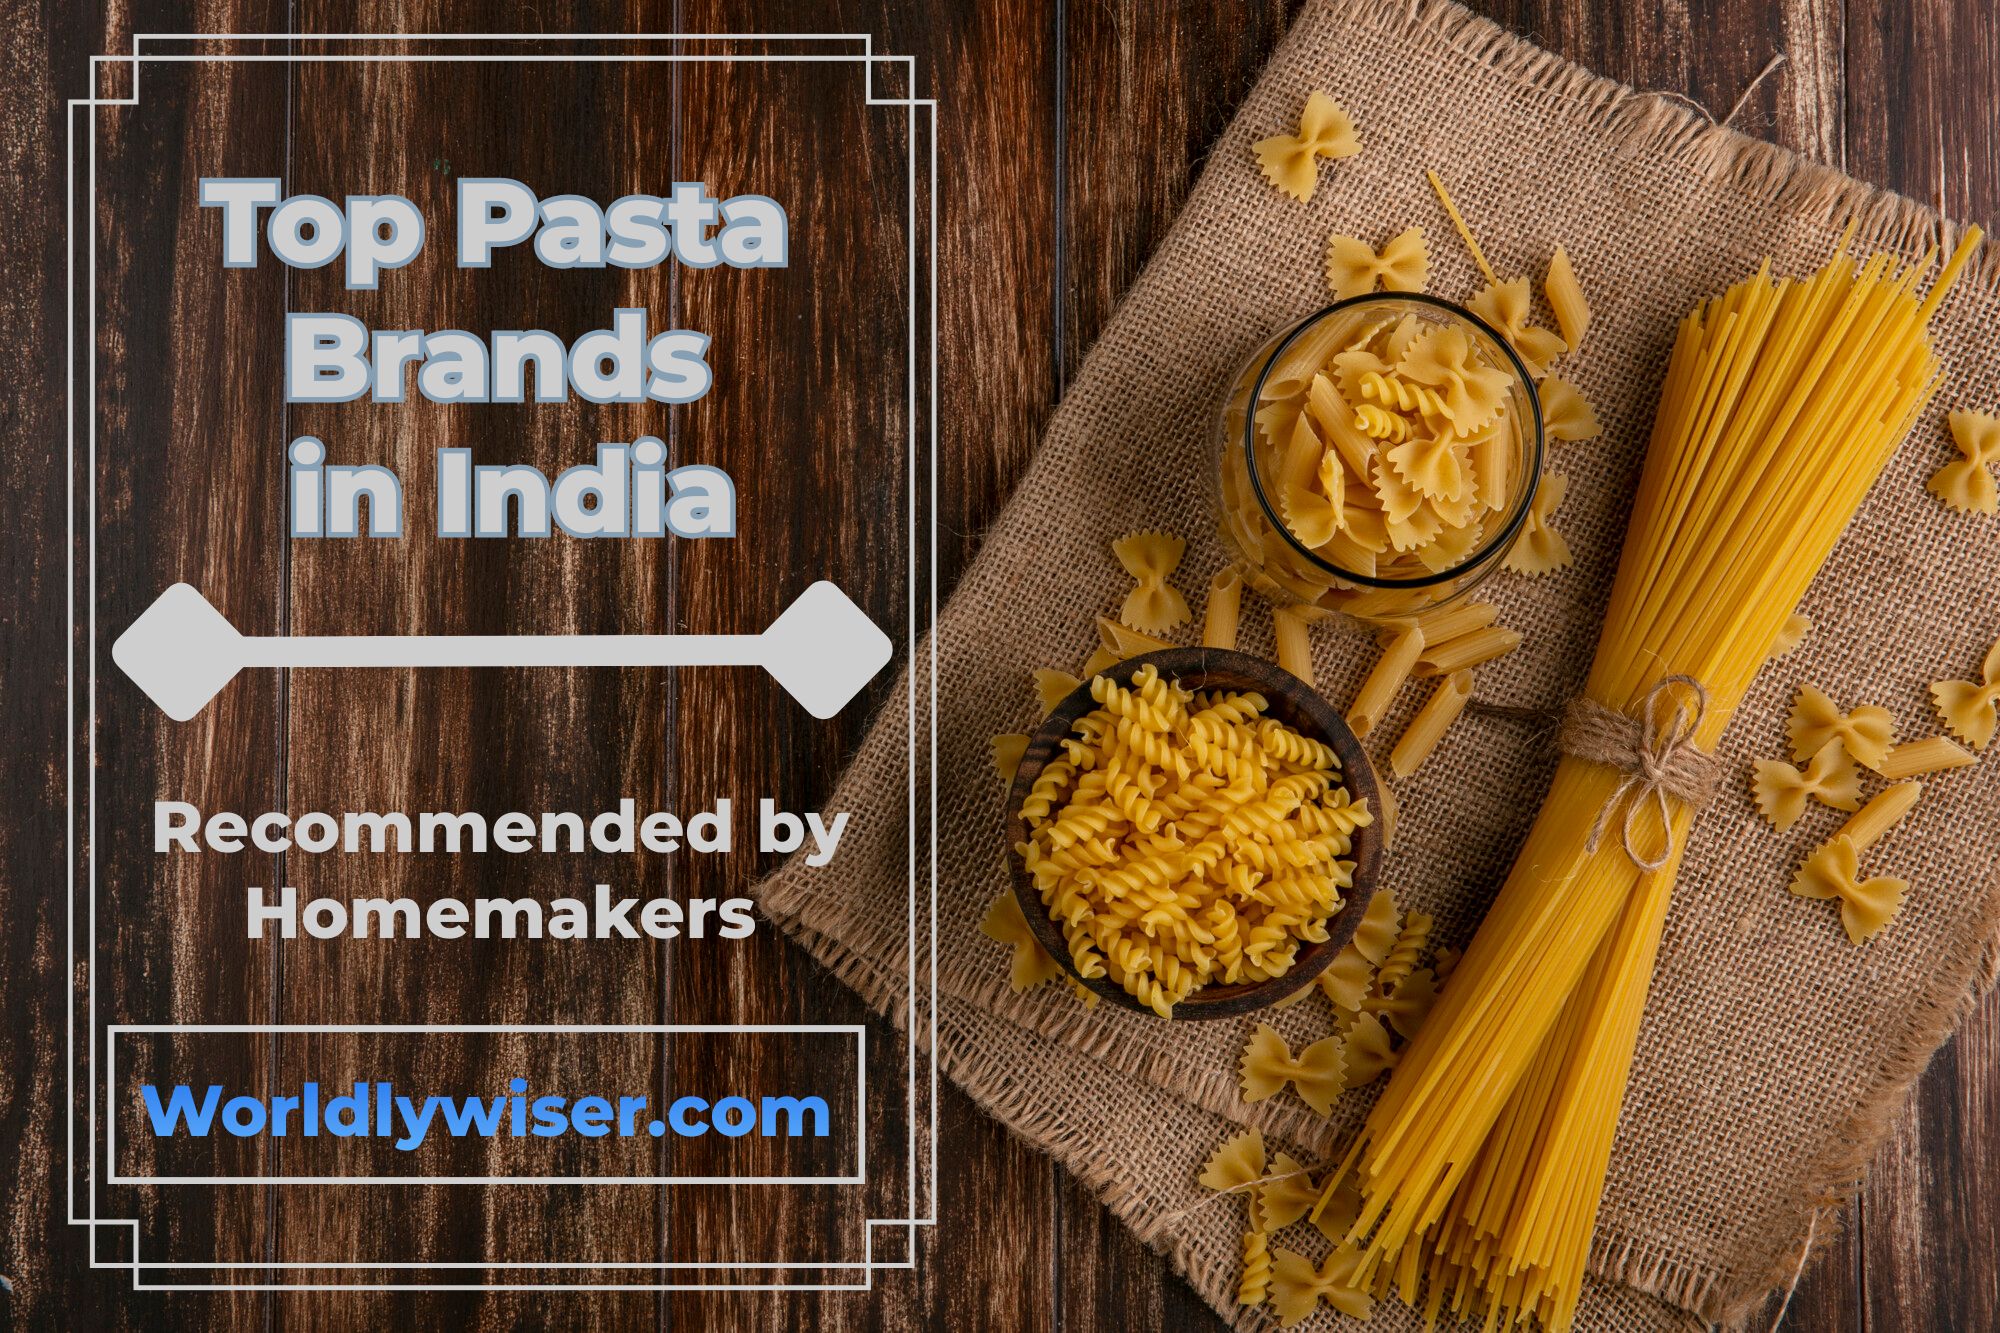 Top Pasta Brands in India